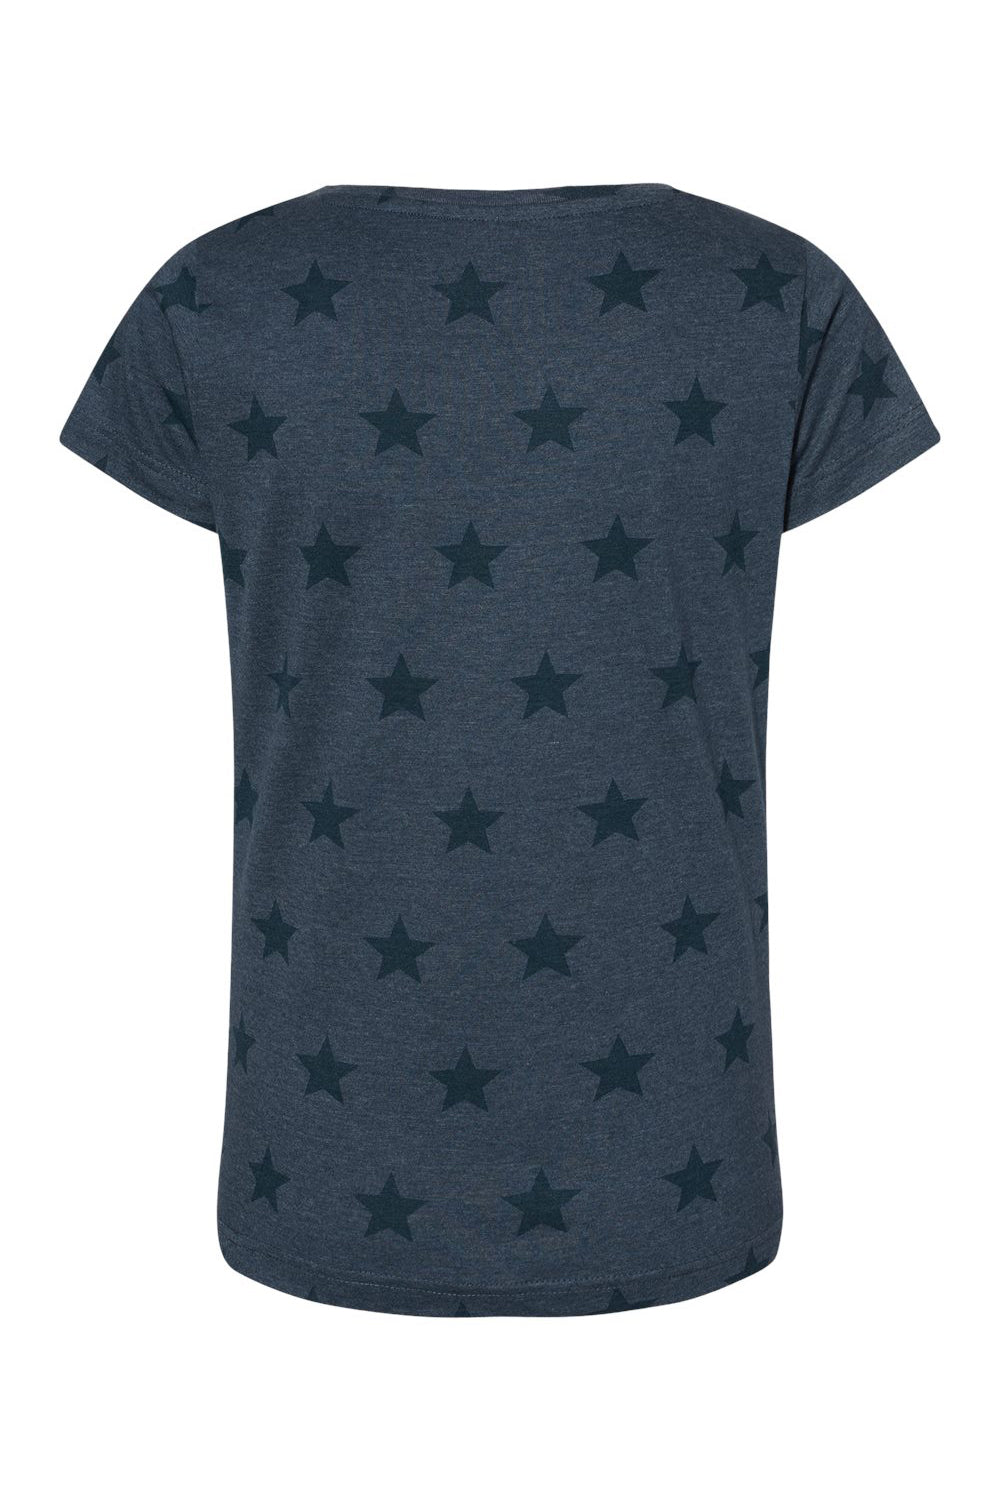 Code Five 3629 Womens Star Print Short Sleeve Scoop Neck T-Shirt Denim Blue Flat Back